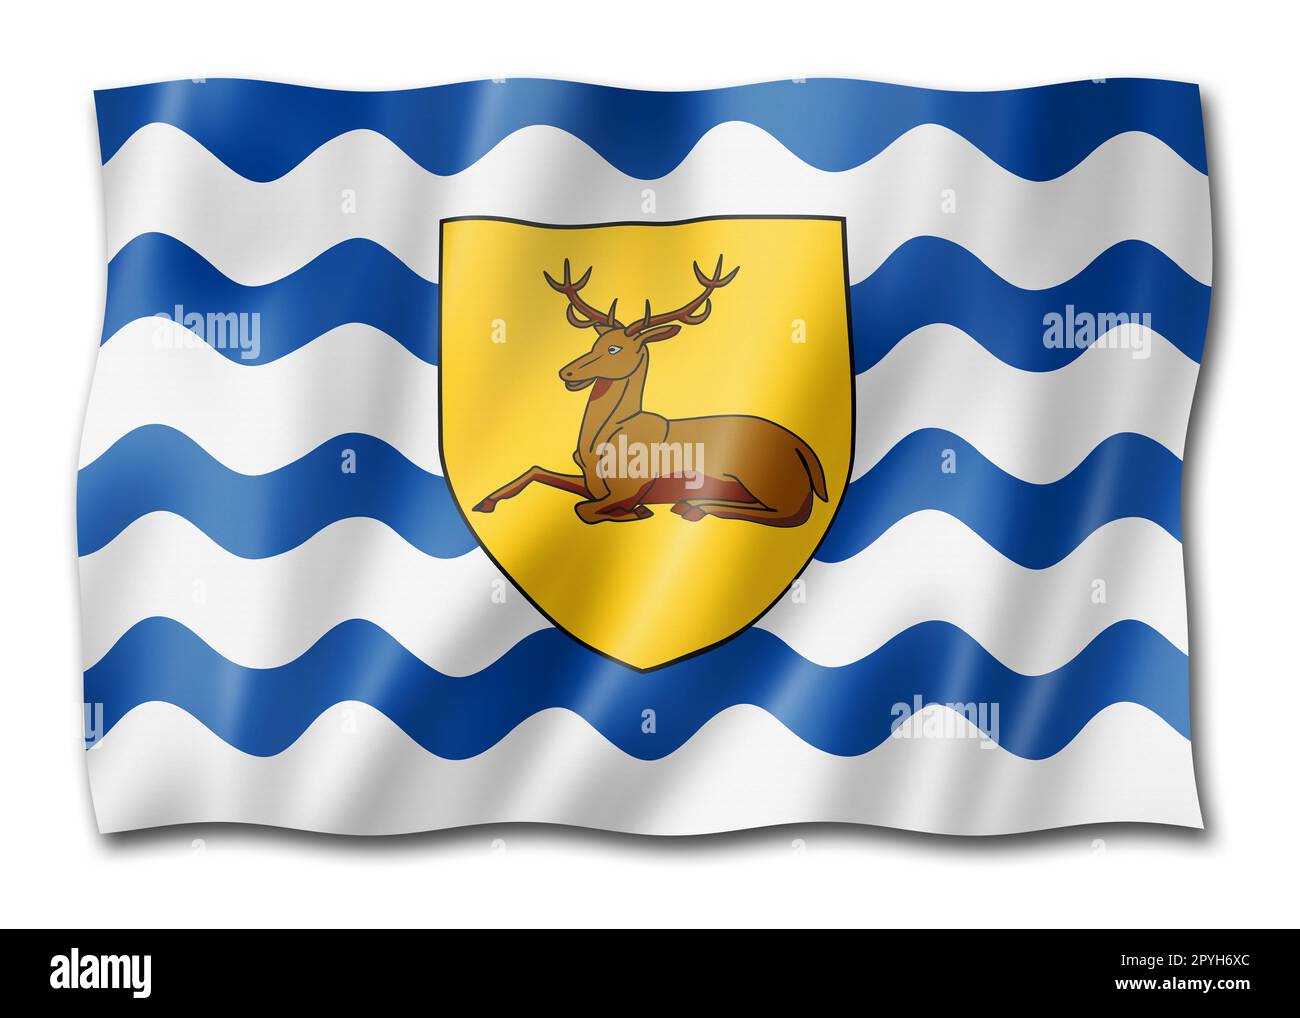 Hertfordshire County flag, United Kingdom waving banner collection. 3D illustration Stock Photo